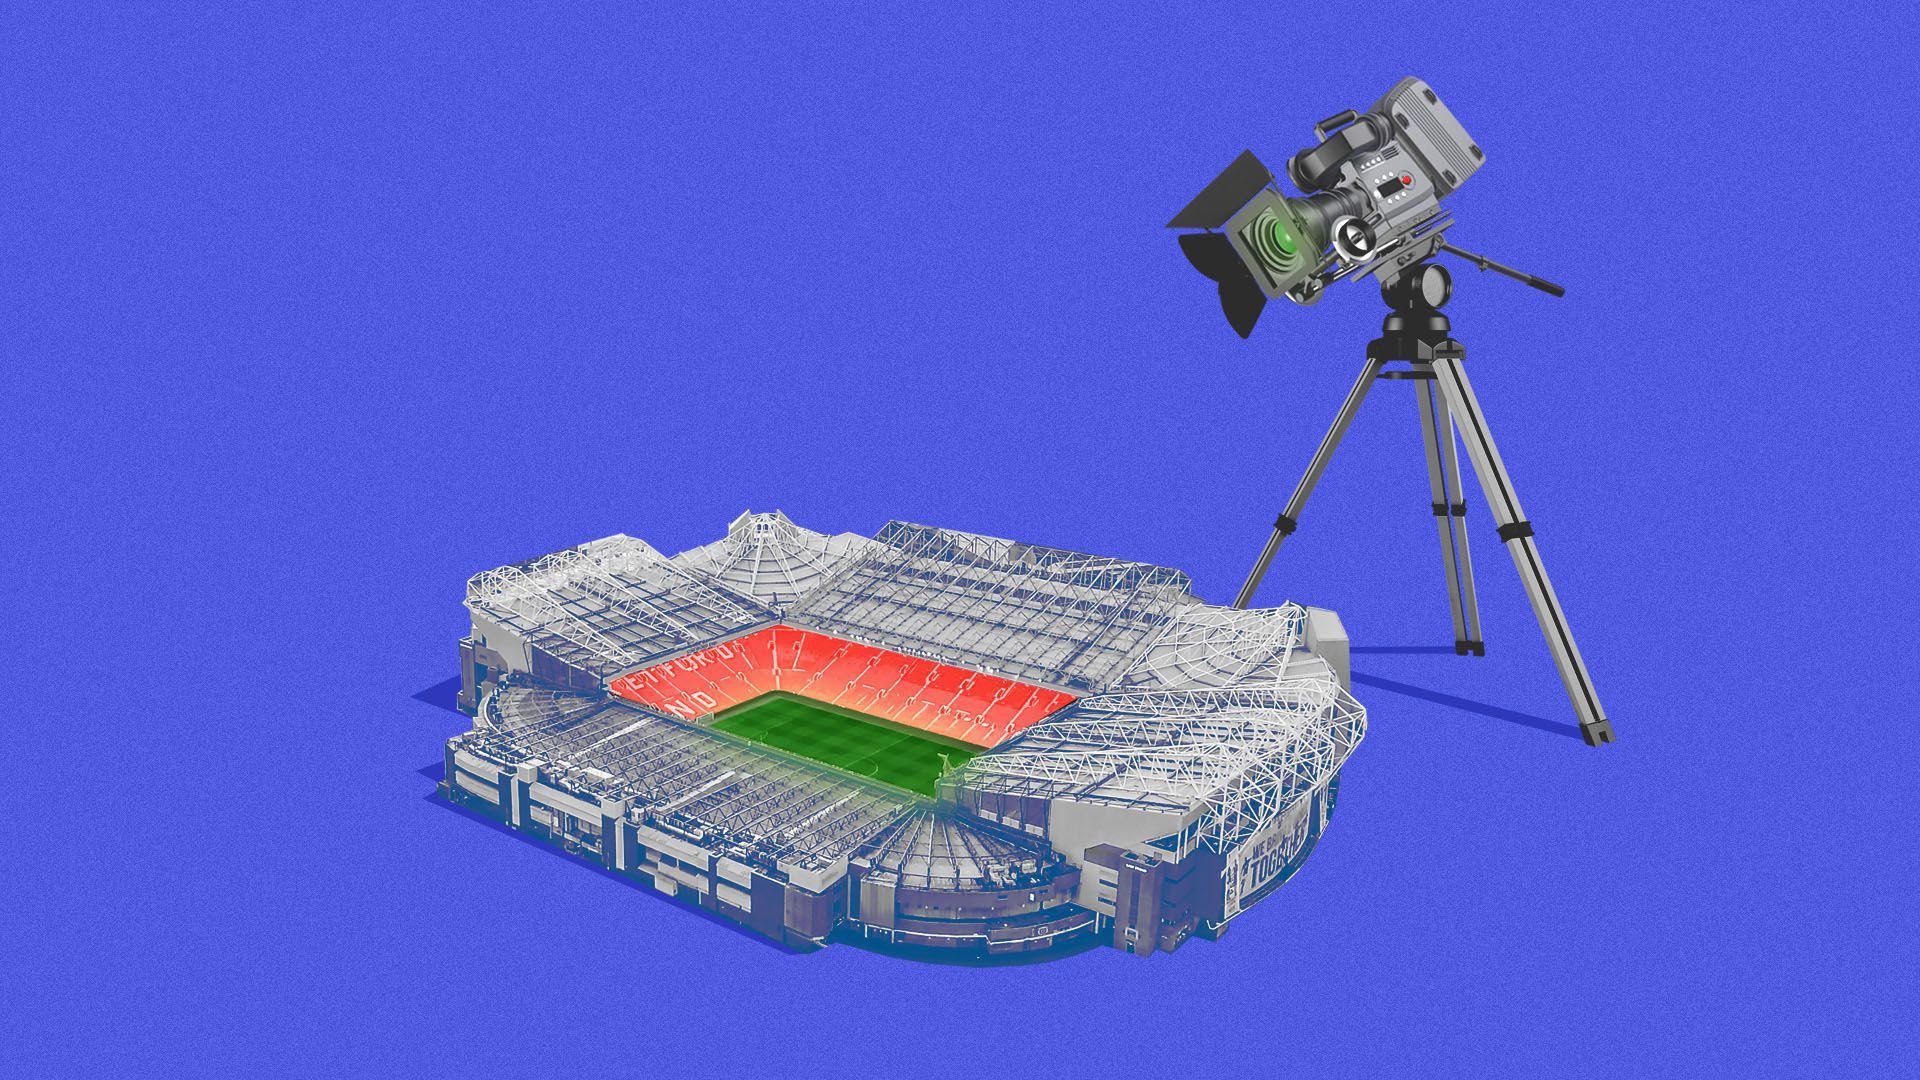 Illustration of a camera above a stadium